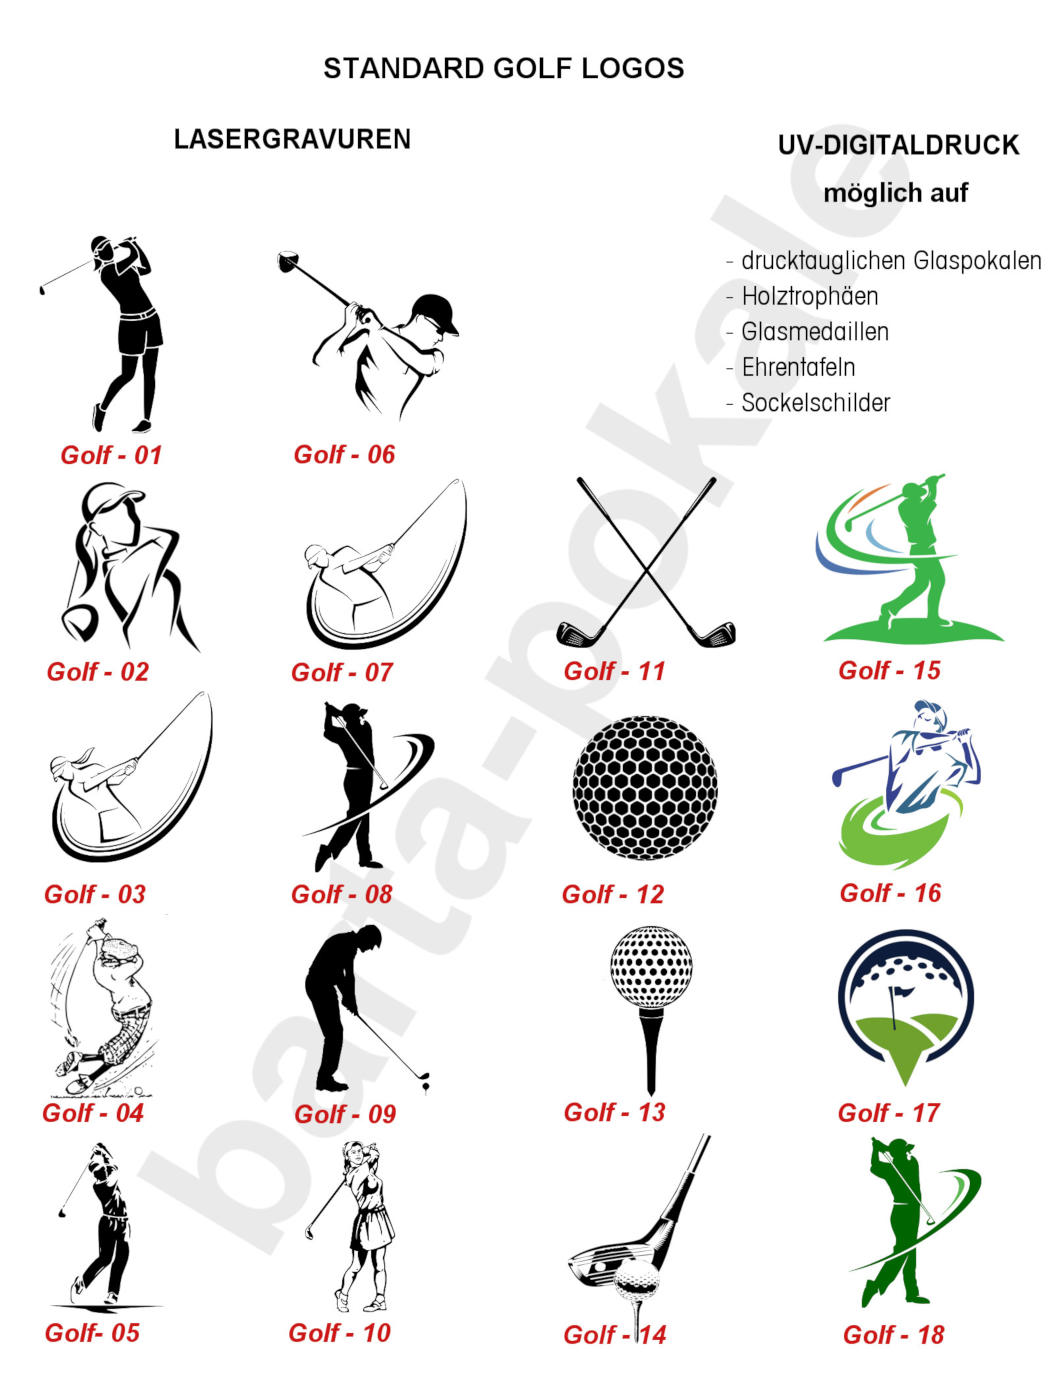 Standard Logos Golf